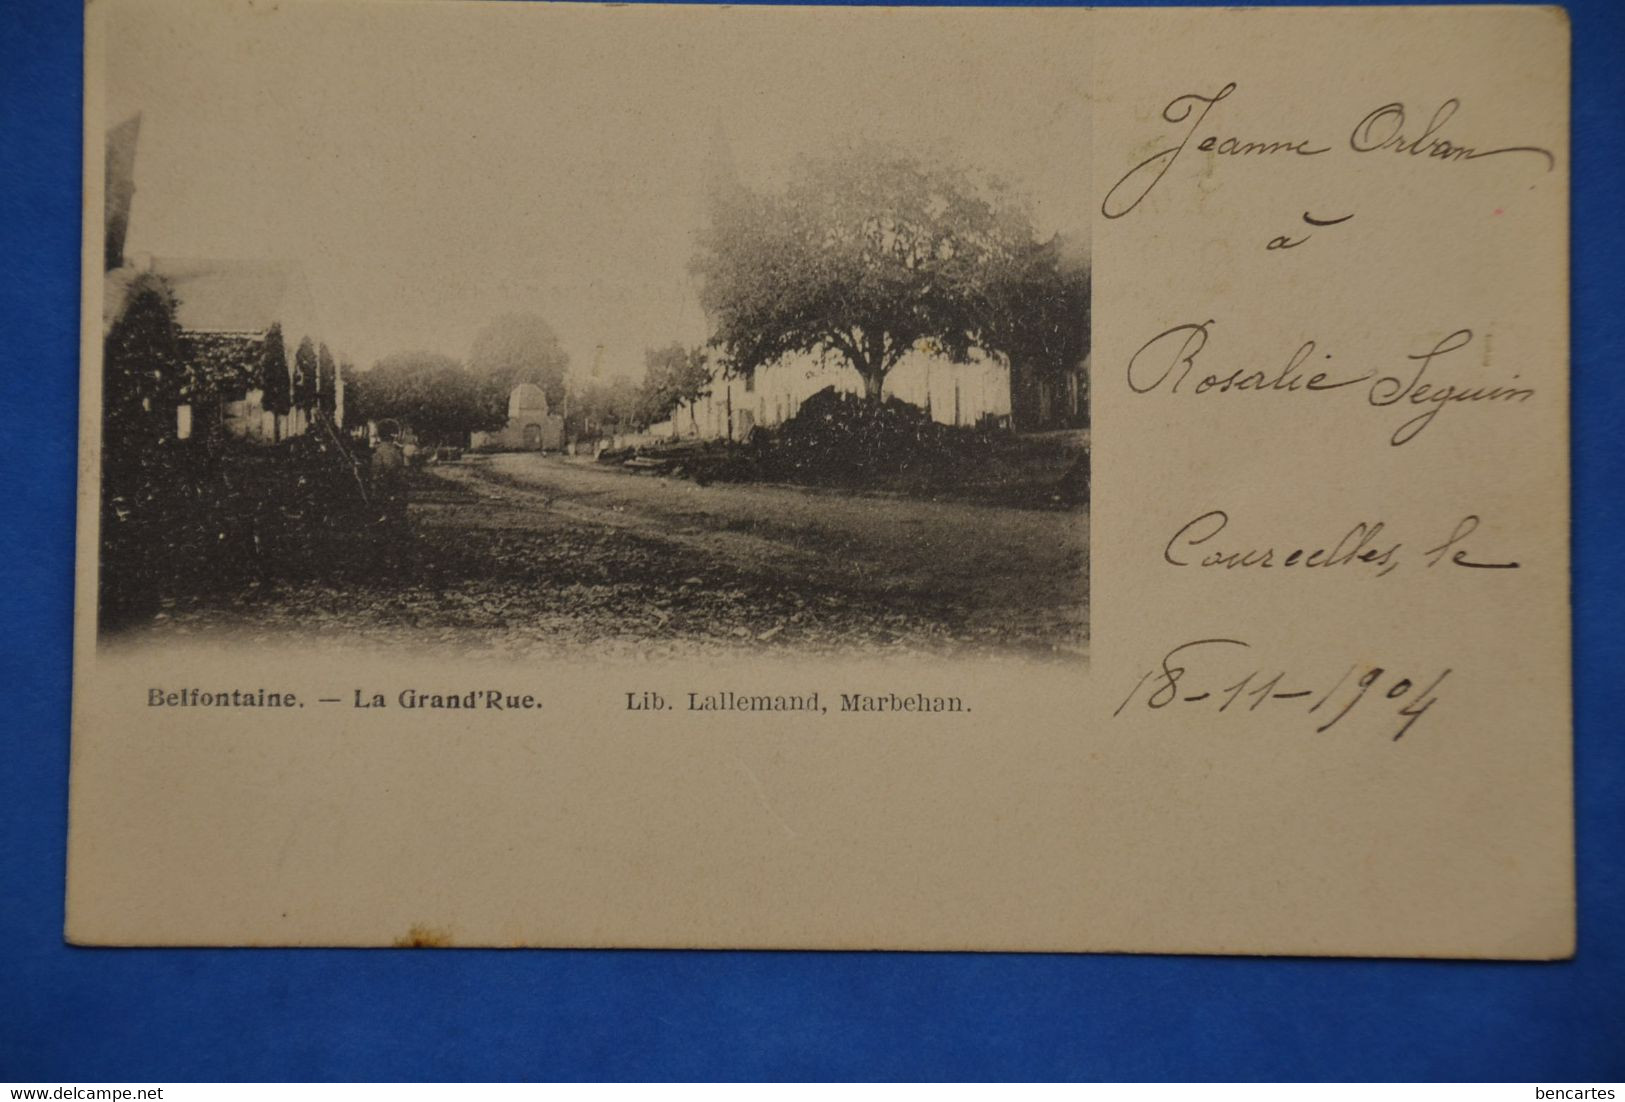 Belfontaine 1904: La Grand'Rue. Ed. Lallemand Marbehan - Habay